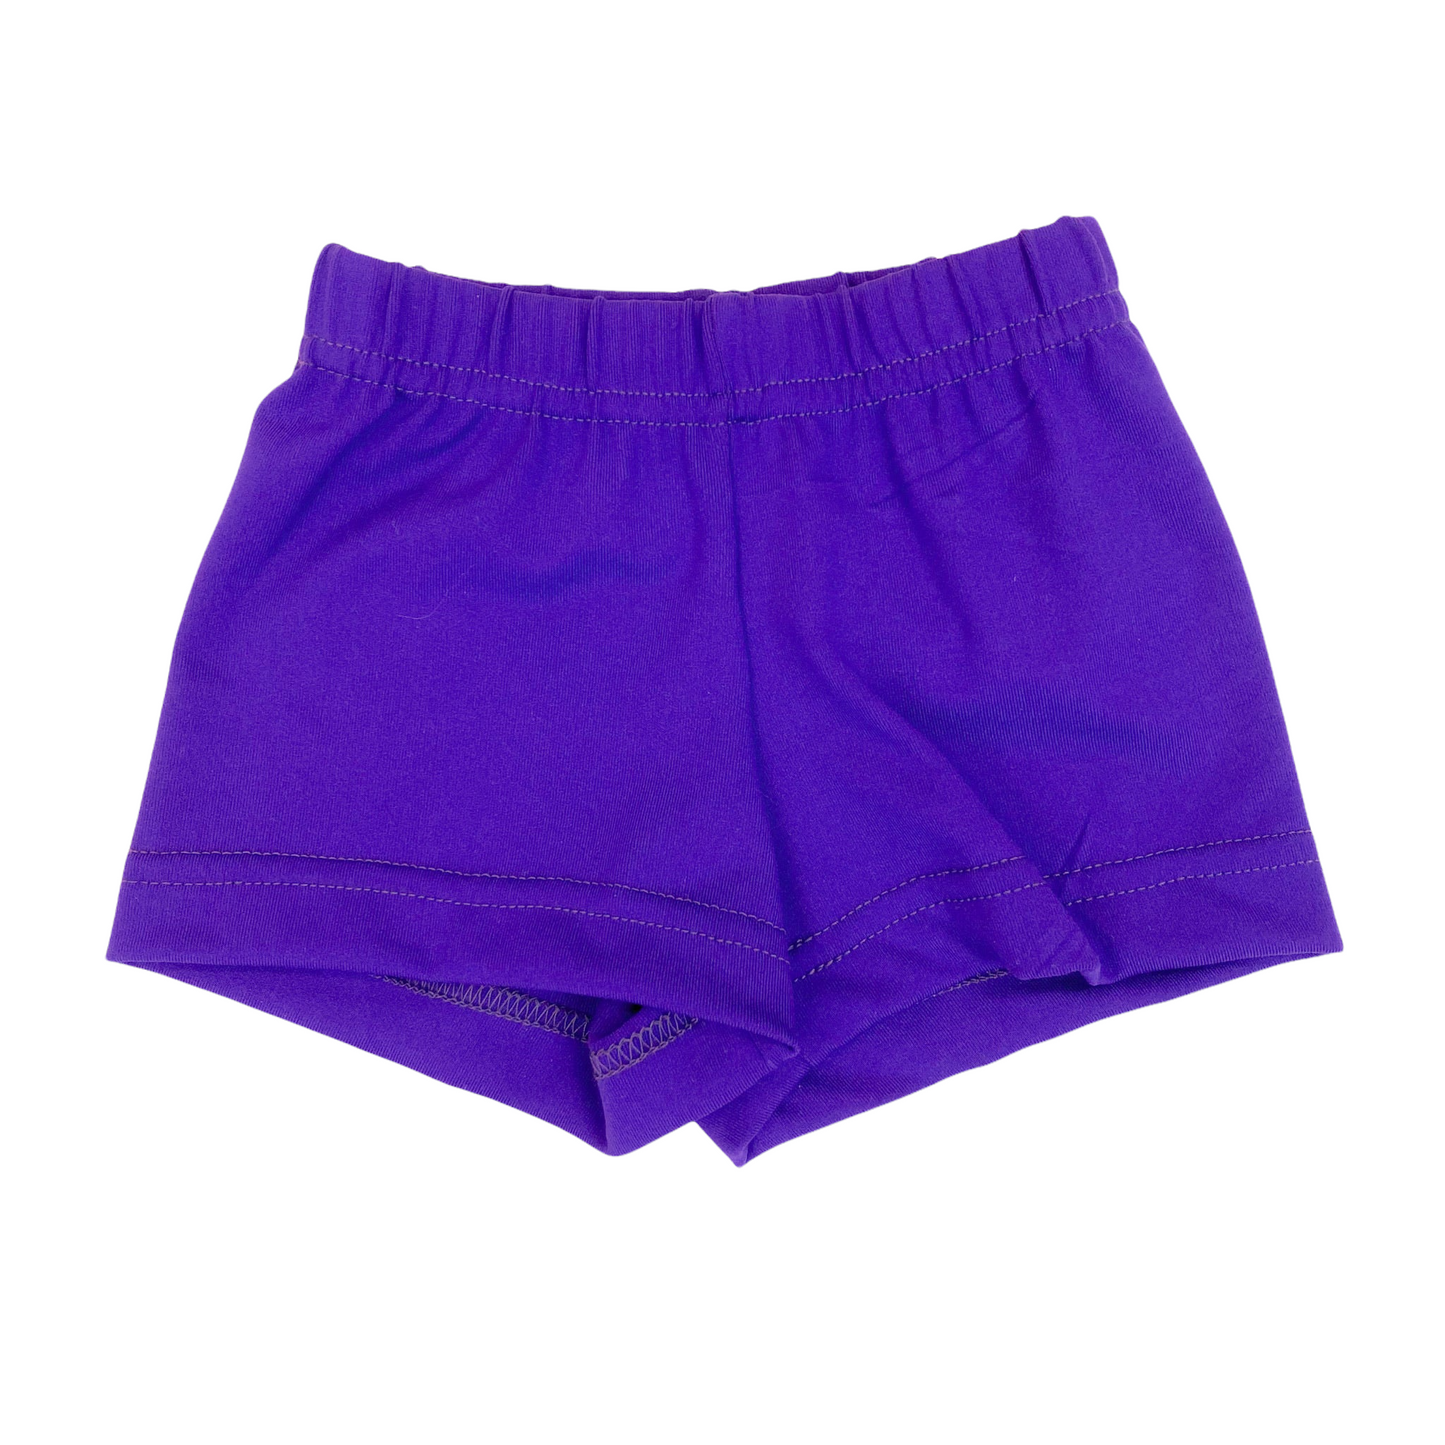 Cheer Uniform Short or Bloomers - Purple